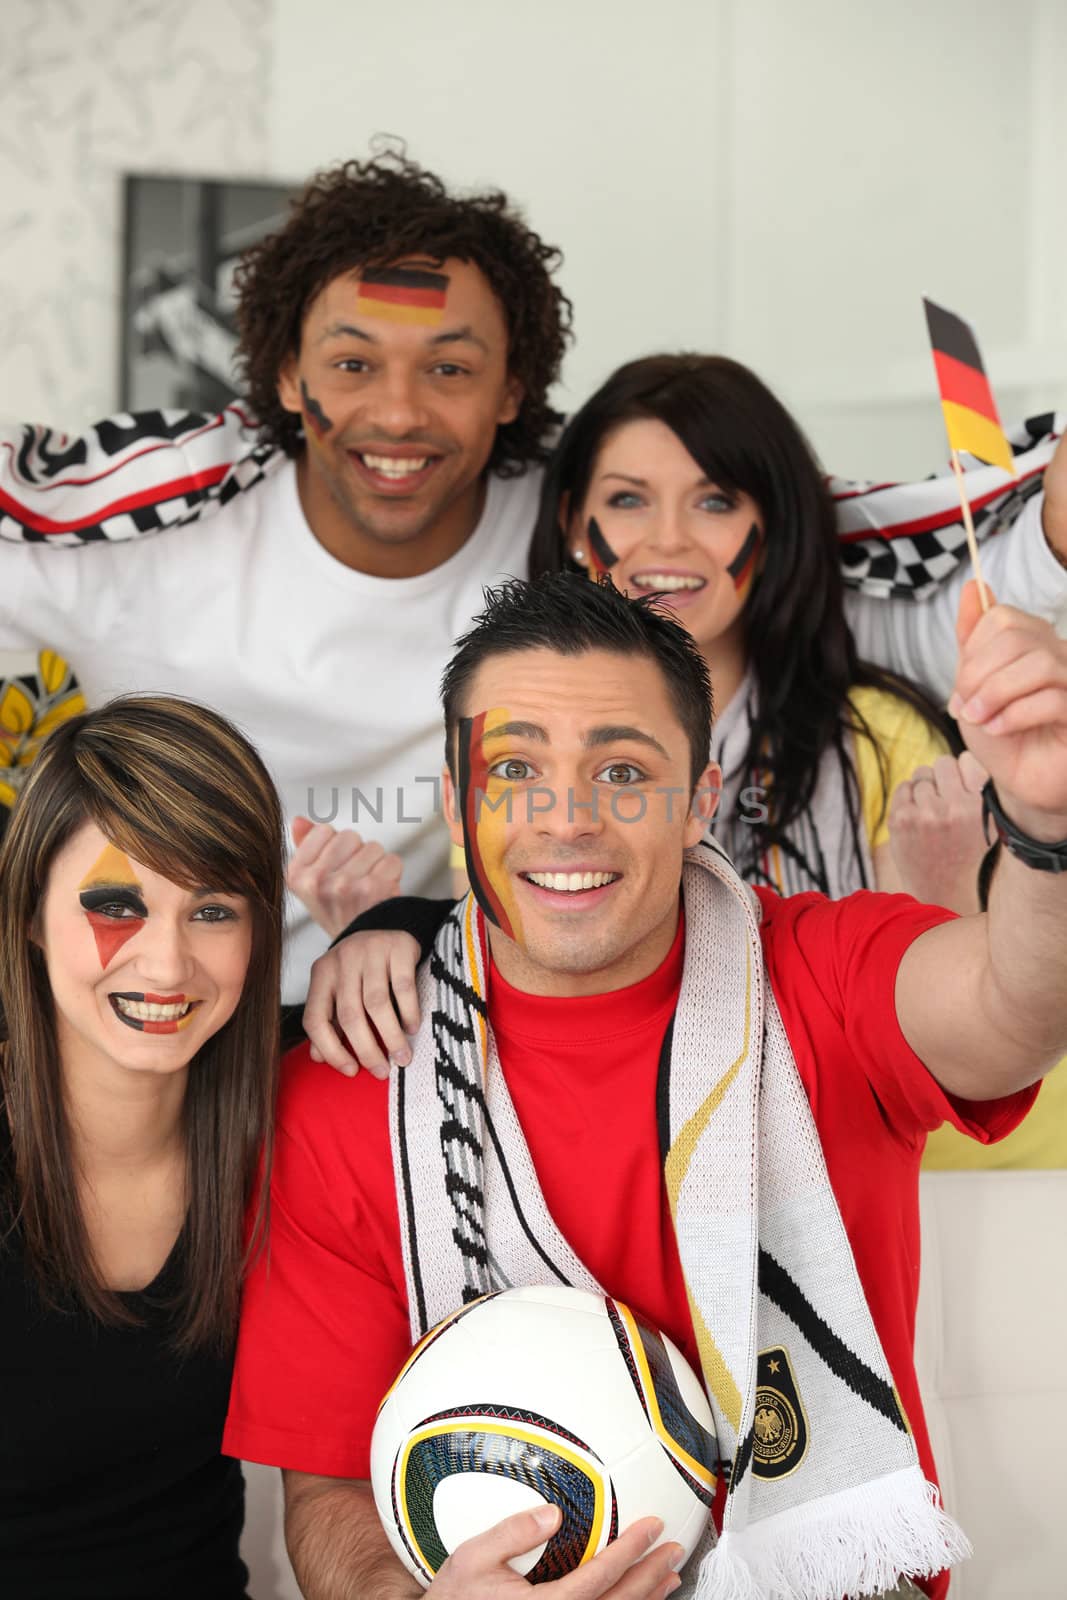 German football fans by phovoir